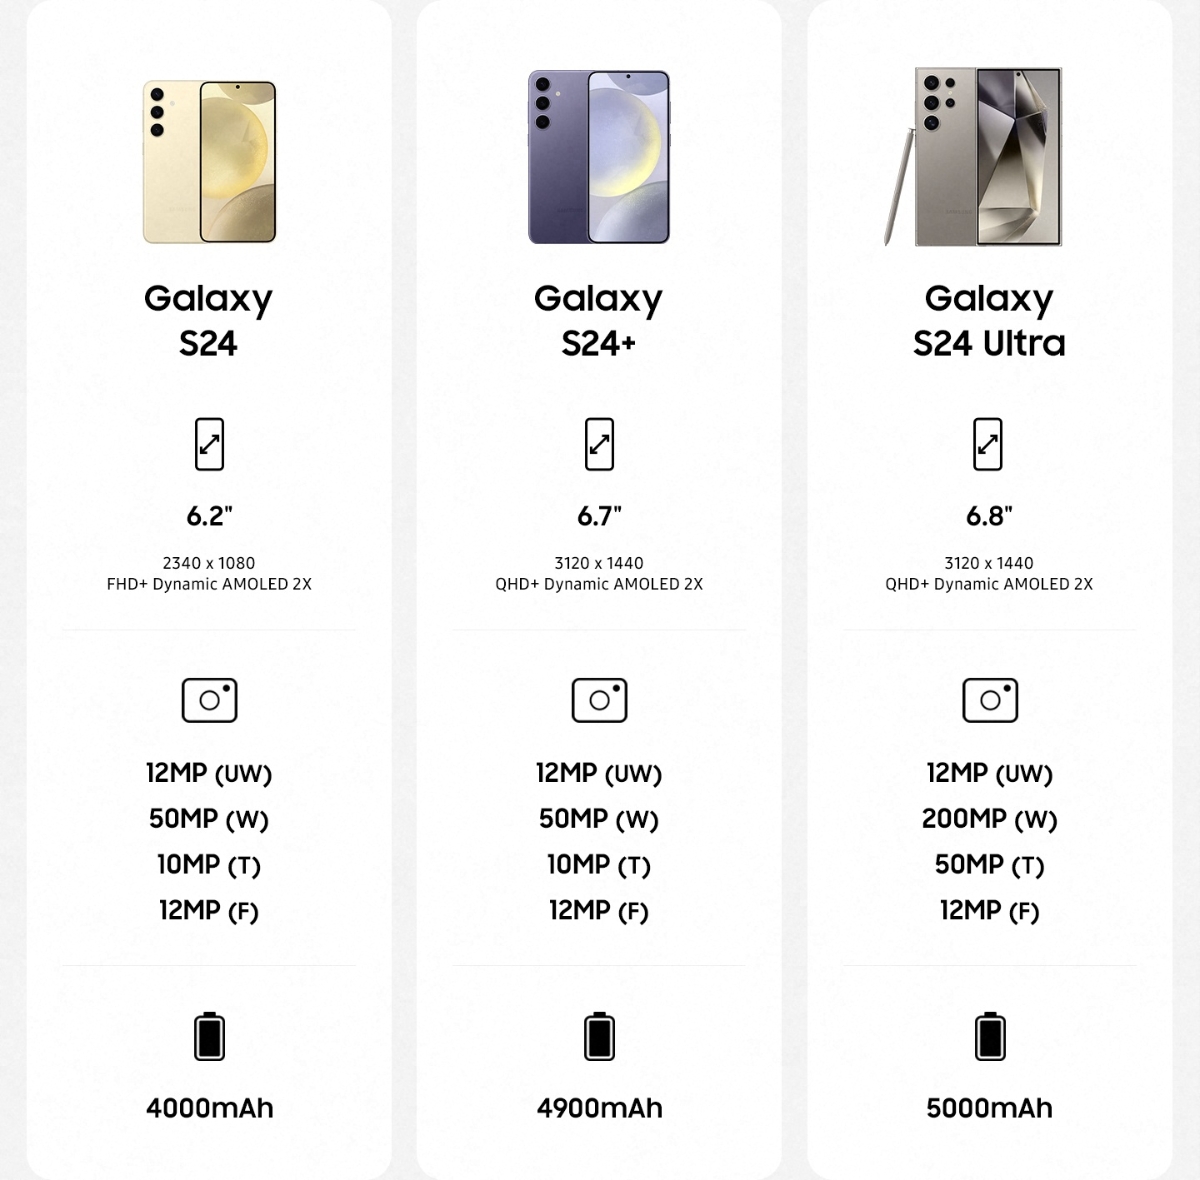 Samsung Galaxy S24 series comparison table